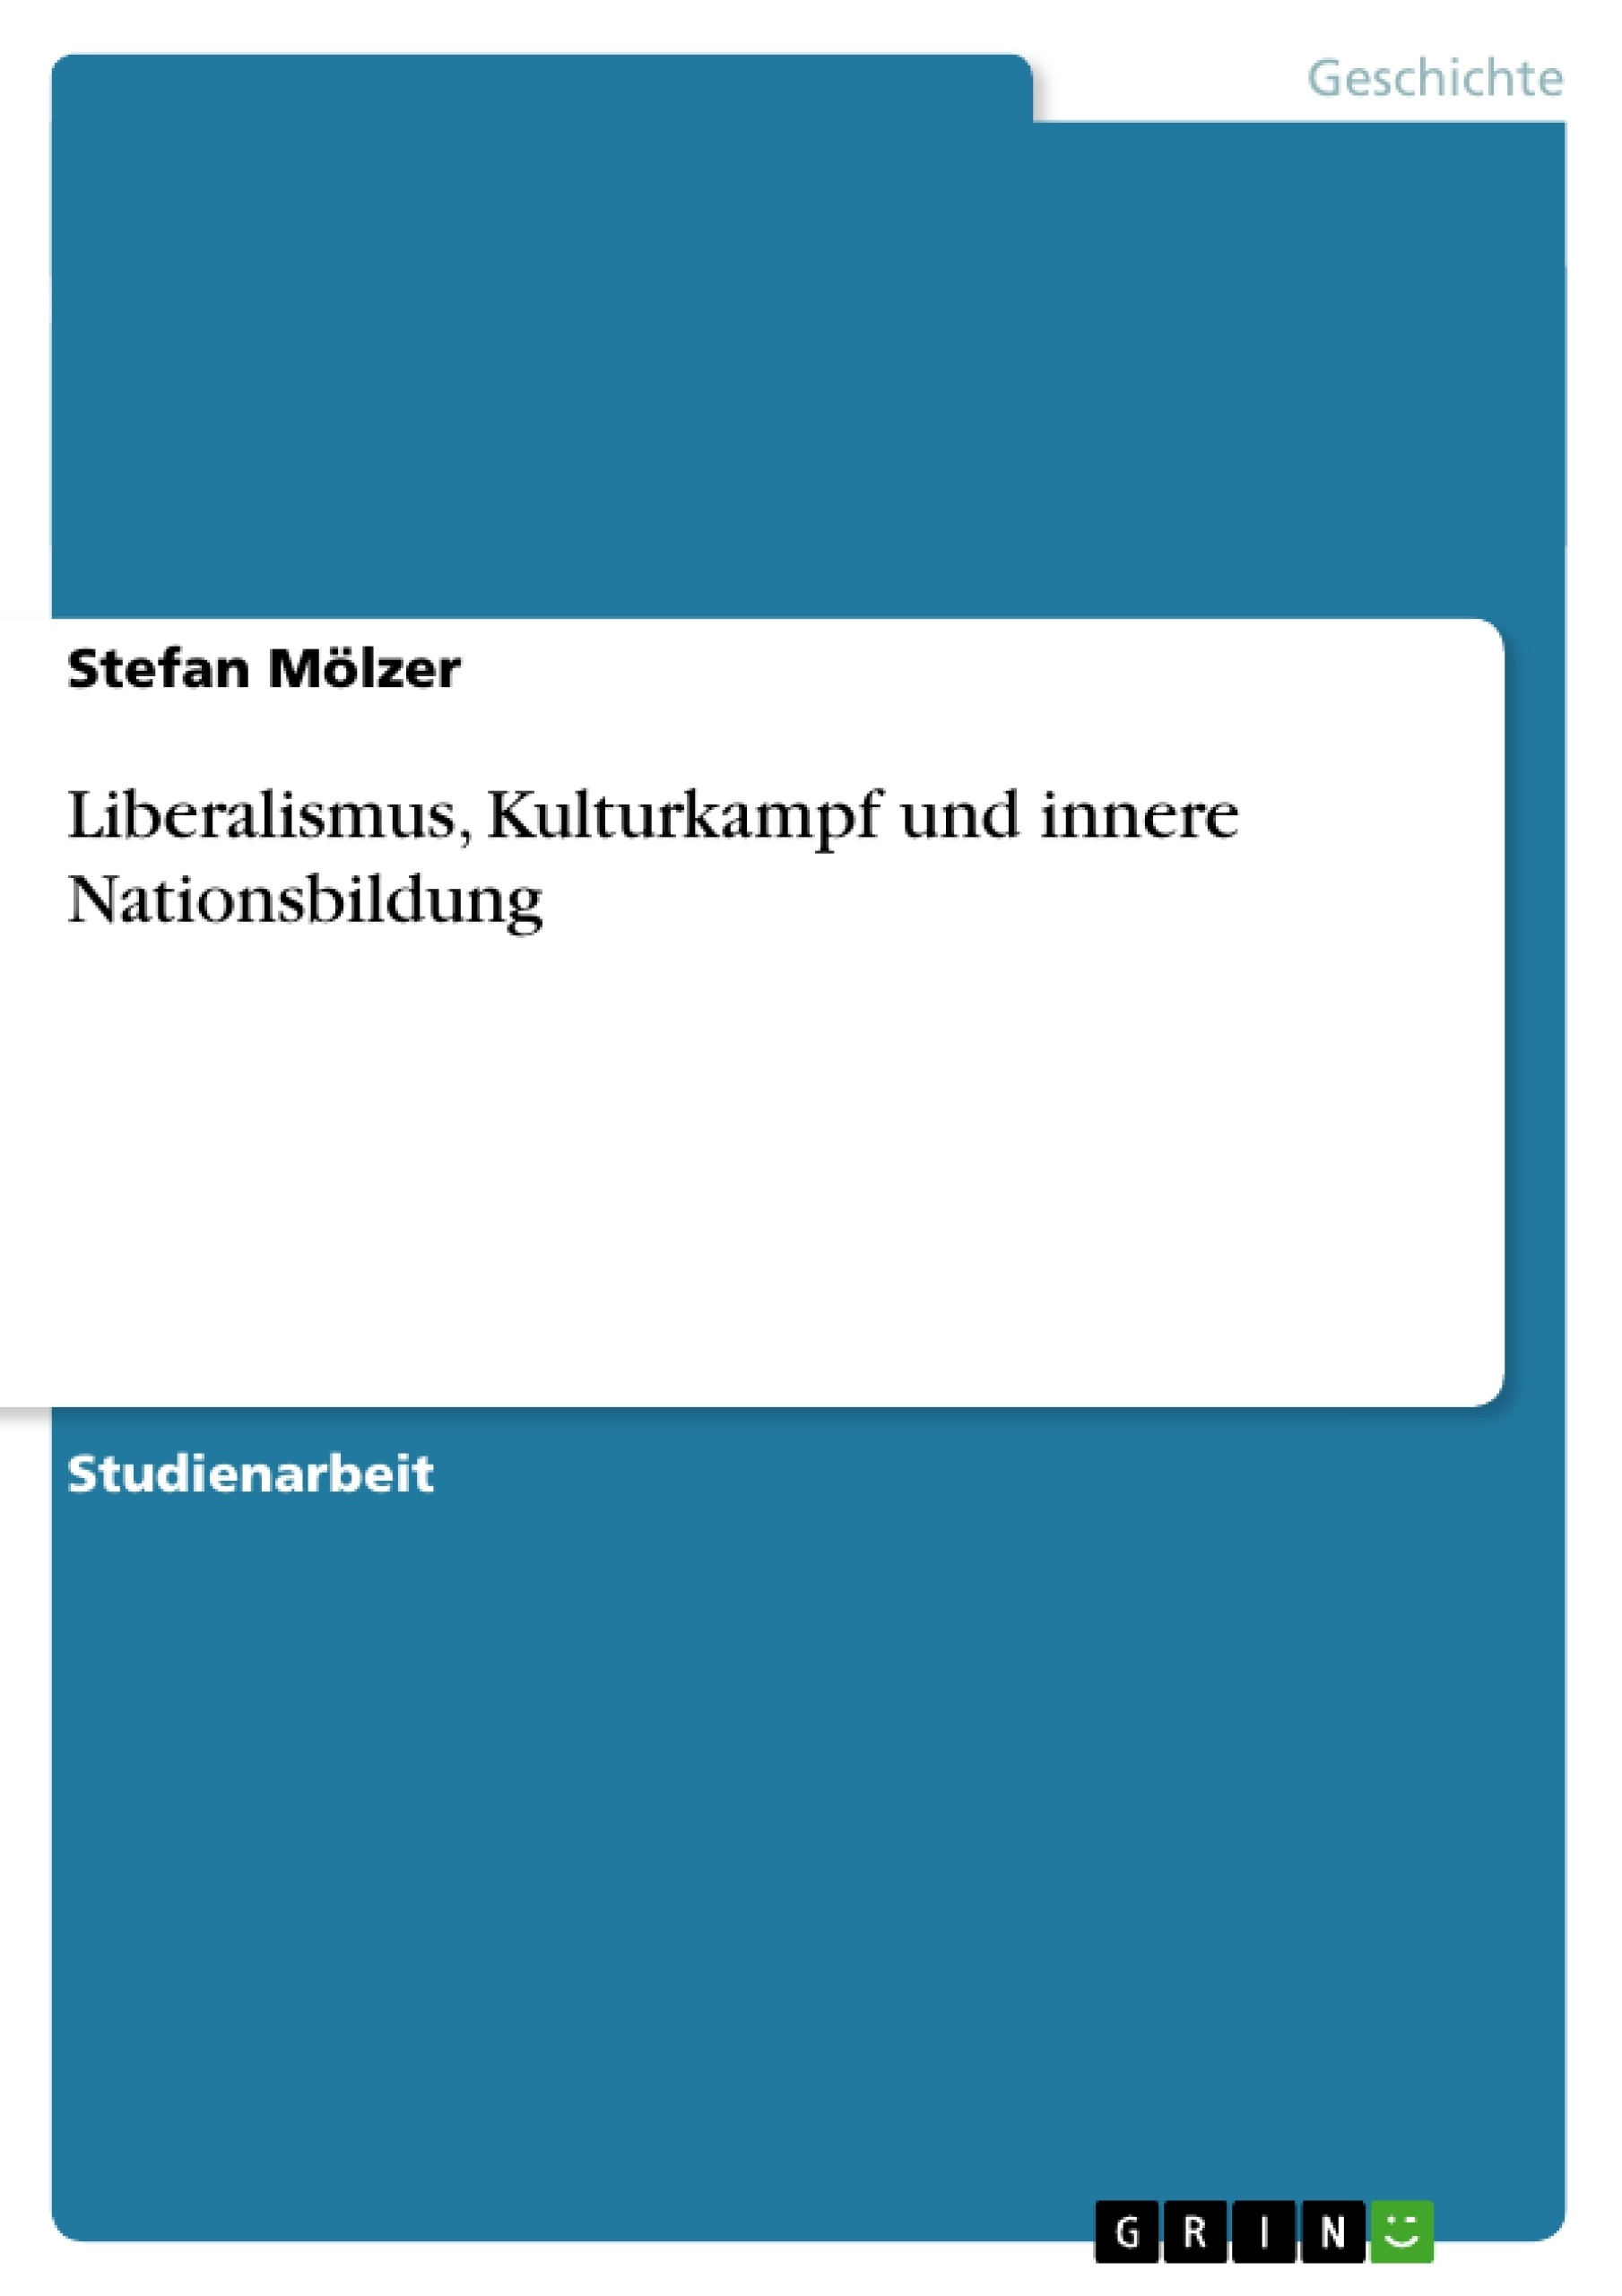 Título: Liberalismus, Kulturkampf und innere Nationsbildung